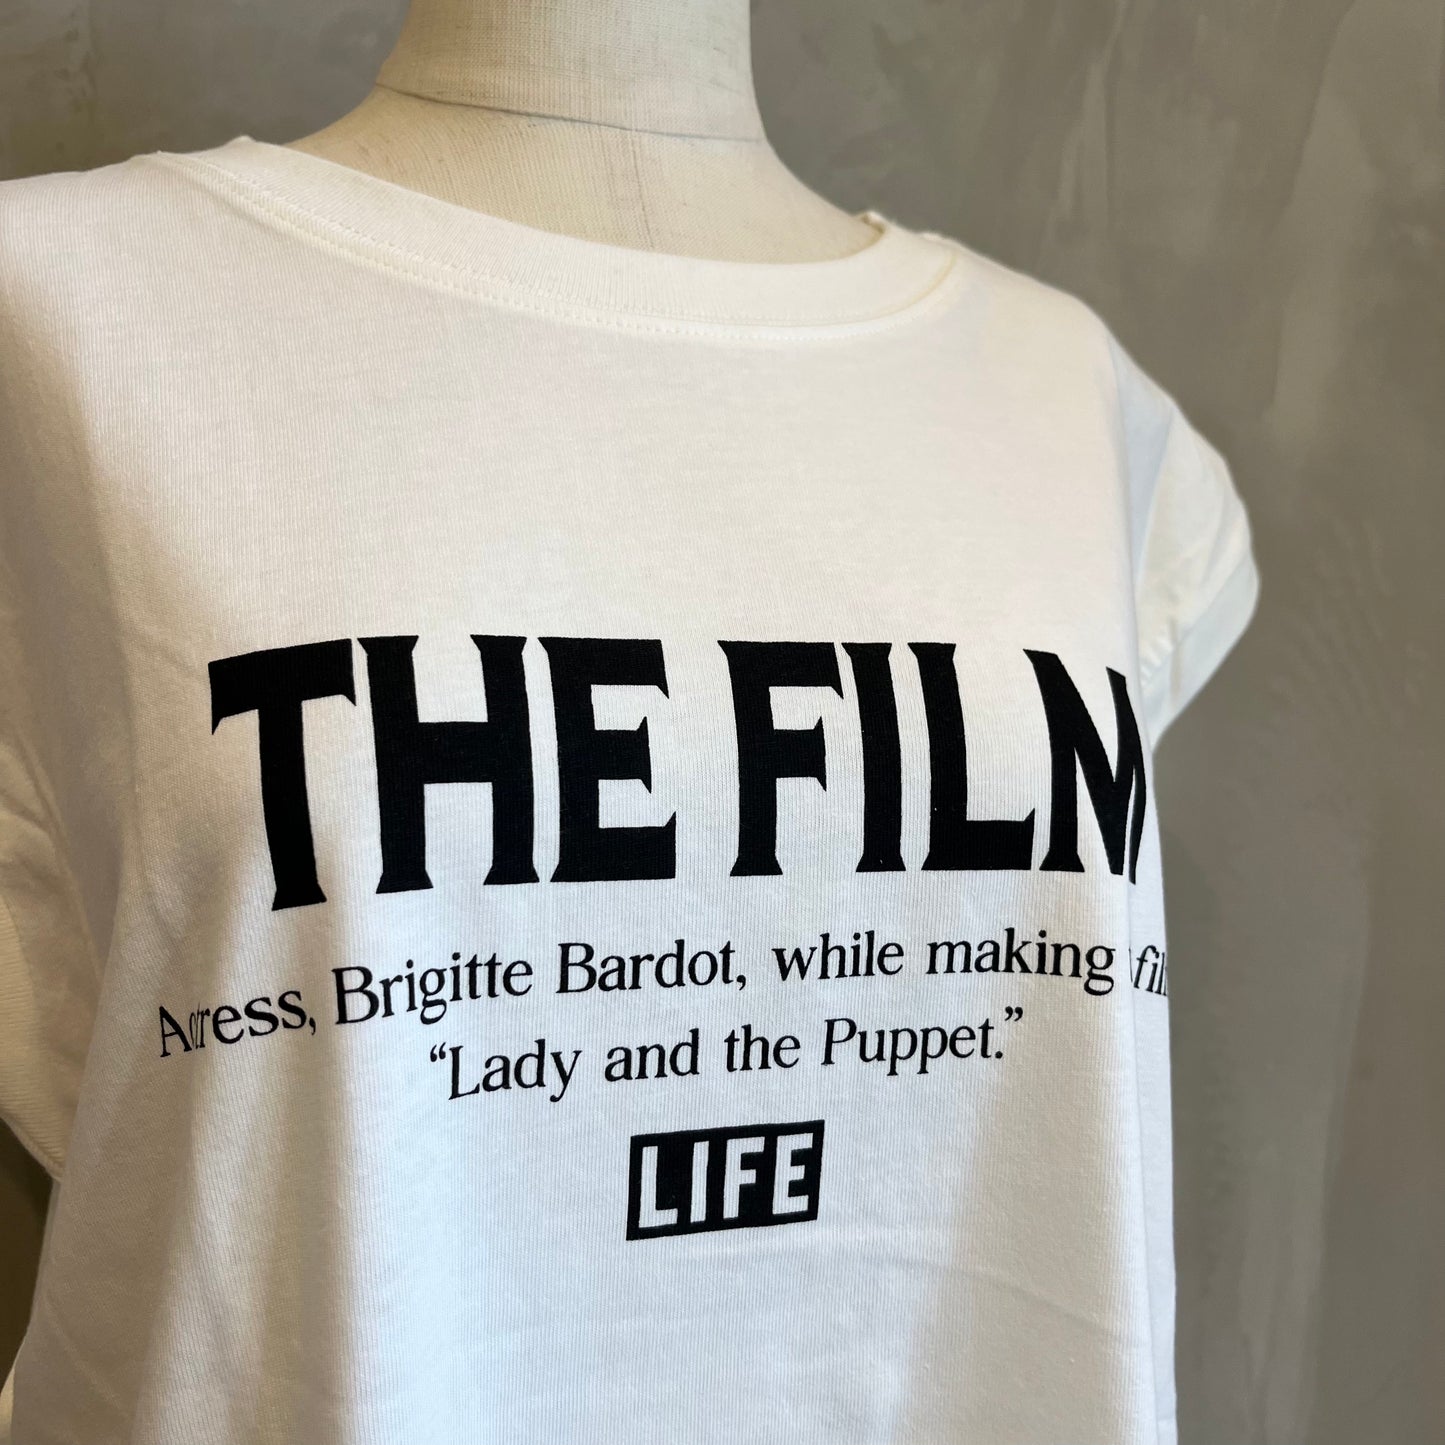 GOOD ROCK SPPED//バックプリントライフTシャツ【THE FILM】